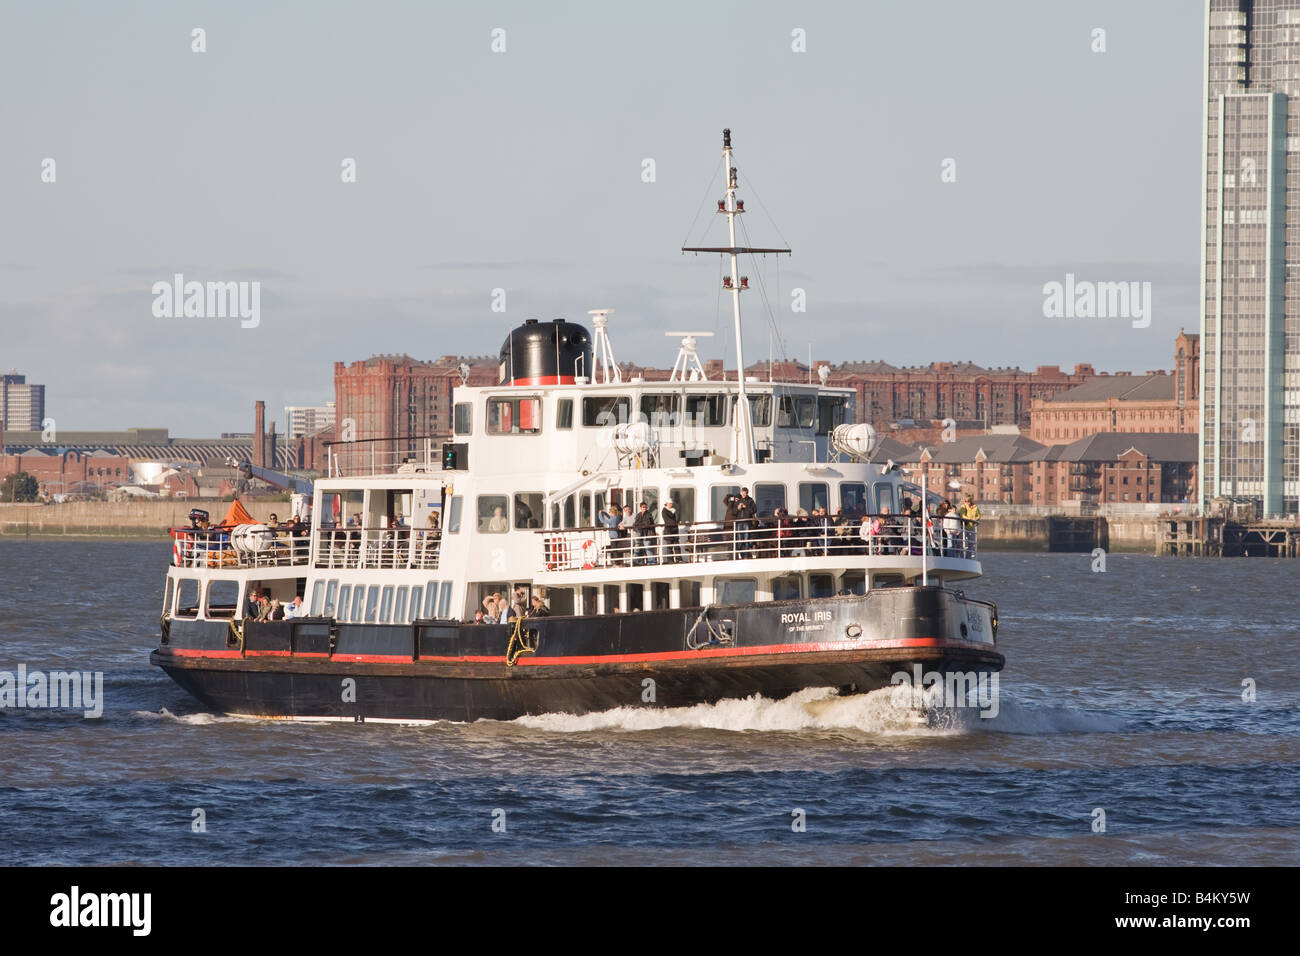 Rivière Mersey ferry, Liverpool, Royaume-Uni Banque D'Images